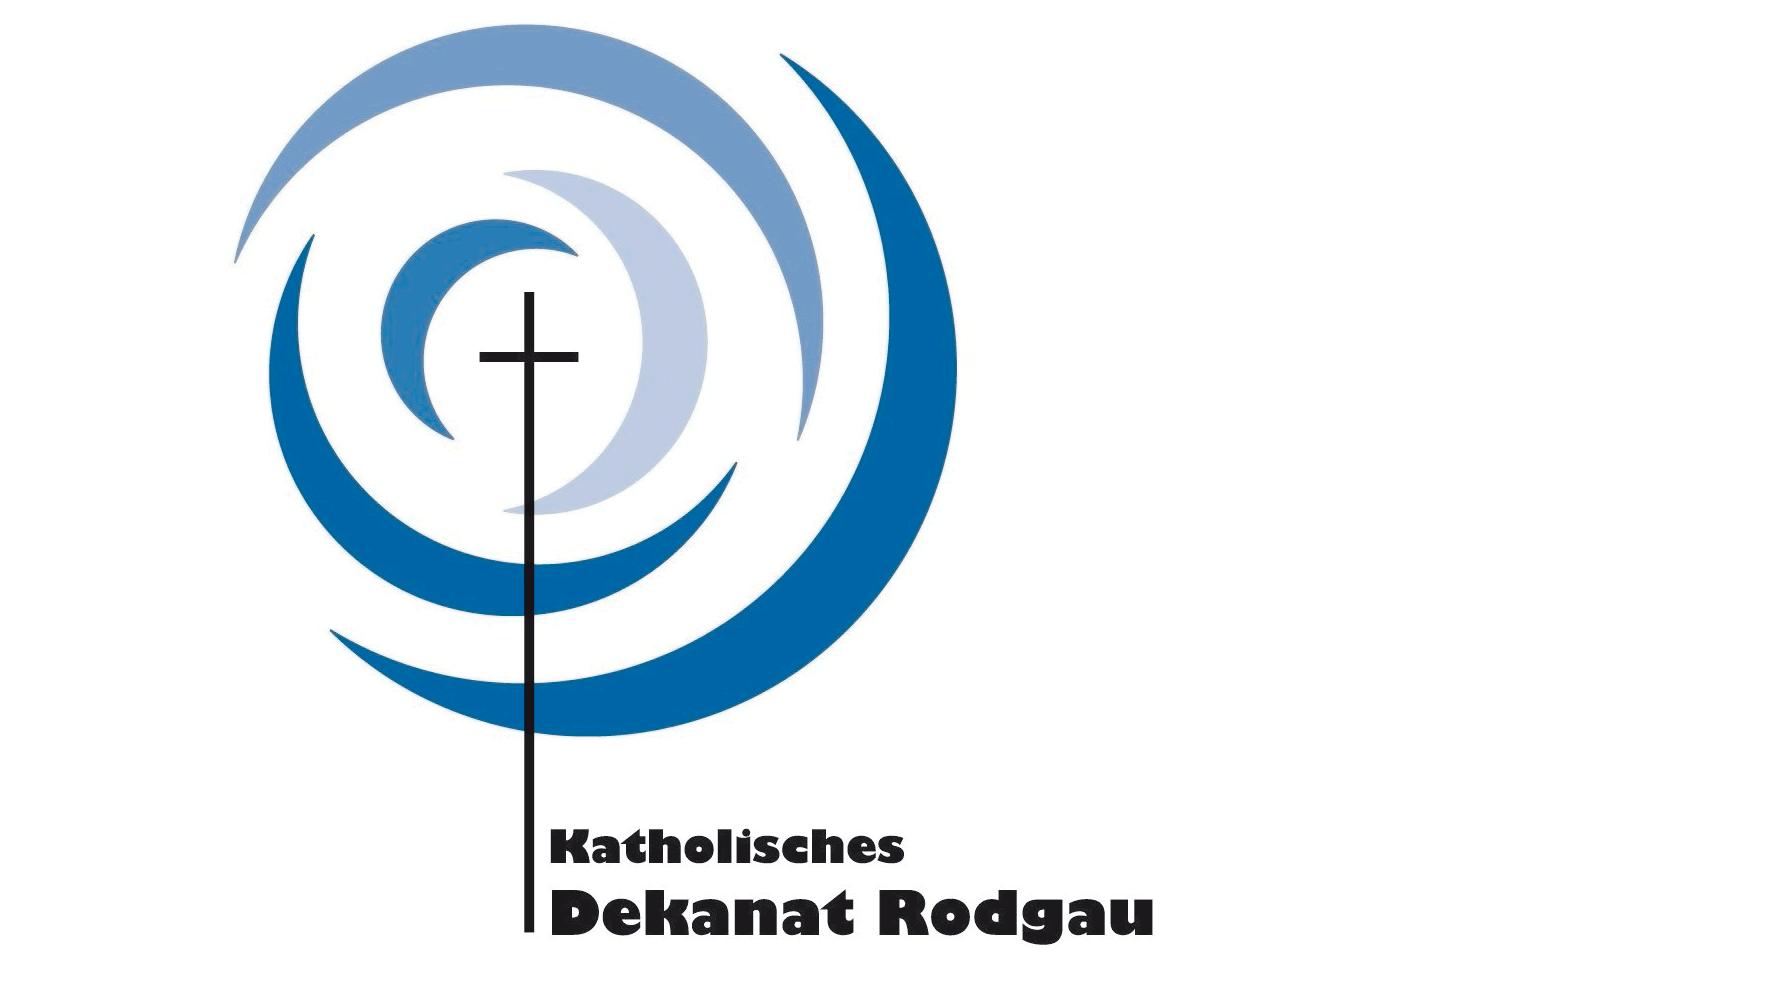 Dekanat Rodgau Logo